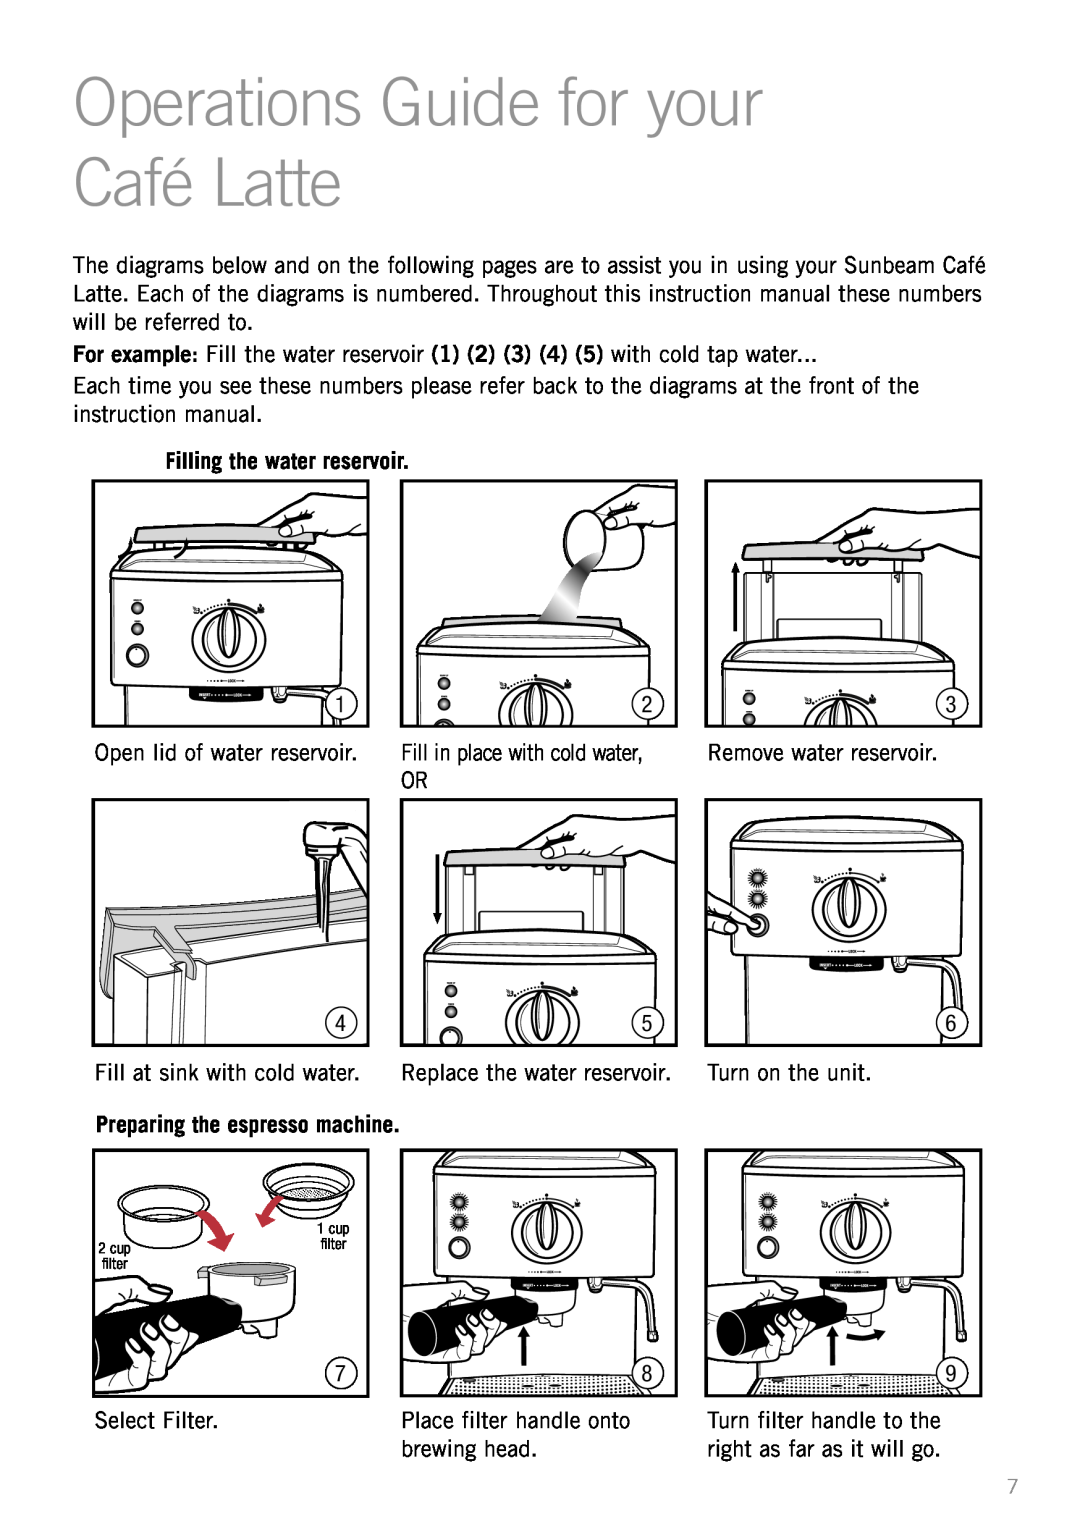 Sunbeam EM5400B manual Operations Guide for your Café Latte, Filling the water reservoir, Preparing the espresso machine 